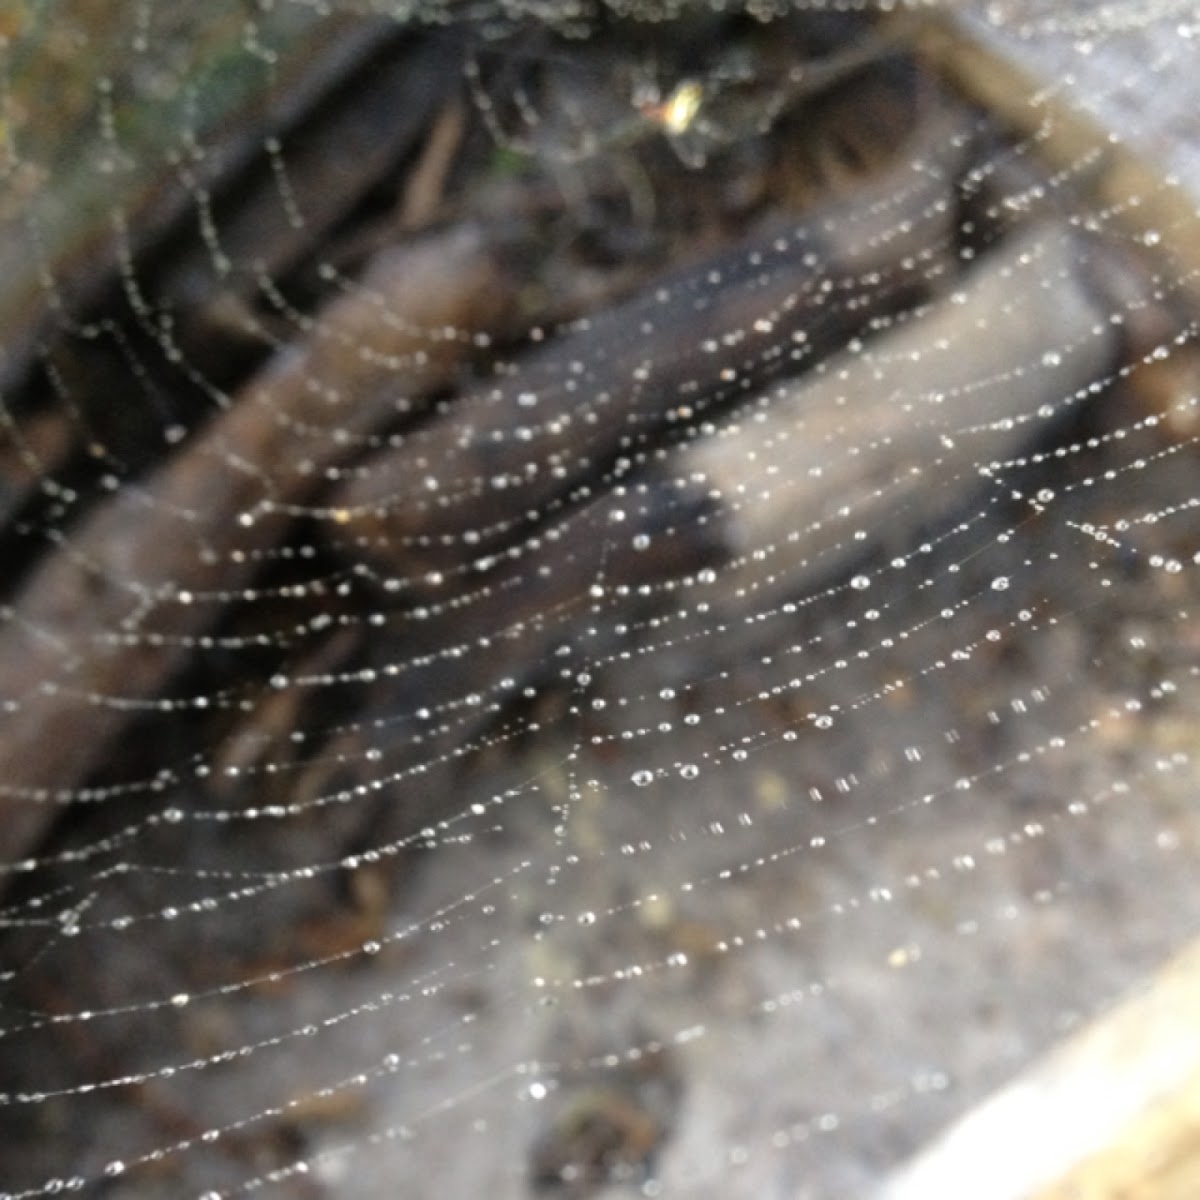 Banana spider's web